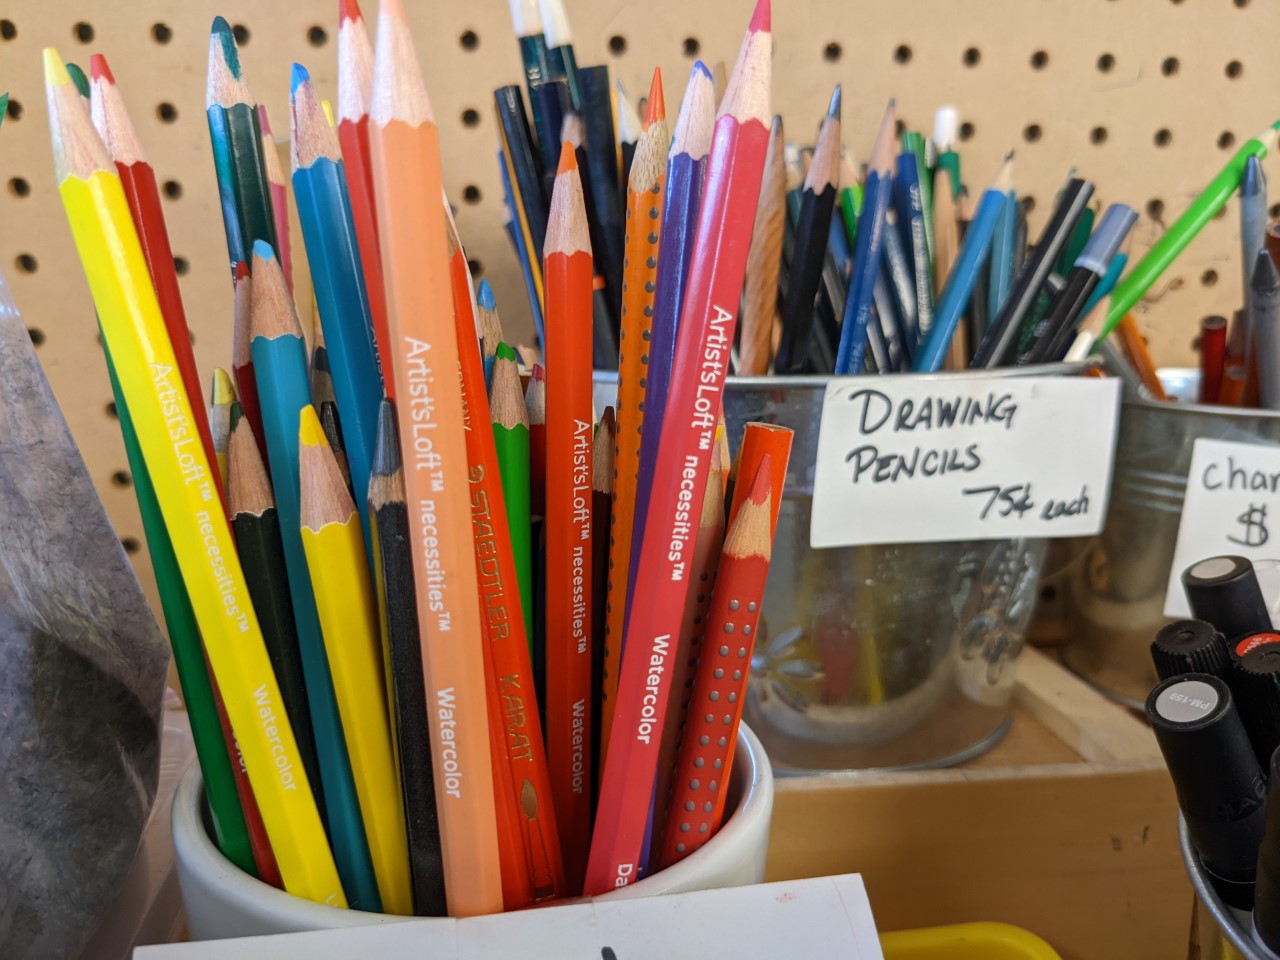  Artist's Loft Colored Pencils, 24 Count : Arts, Crafts & Sewing